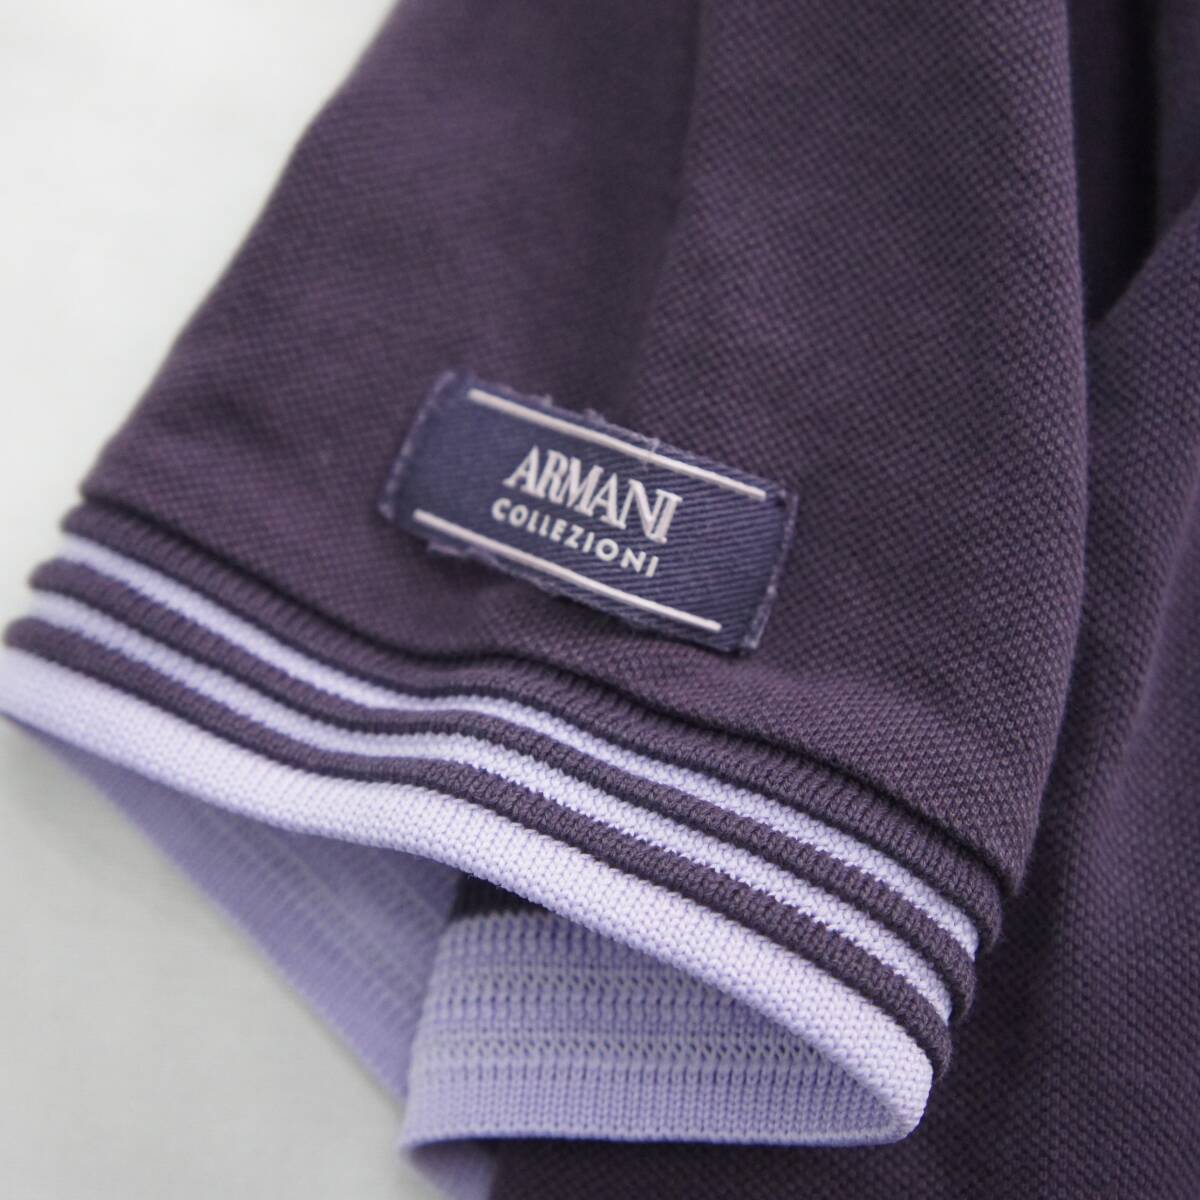 ARMANI COLLEZIONI Armani koretsio-nibai color polo-shirt Bi-Color Polo Shirt purple 